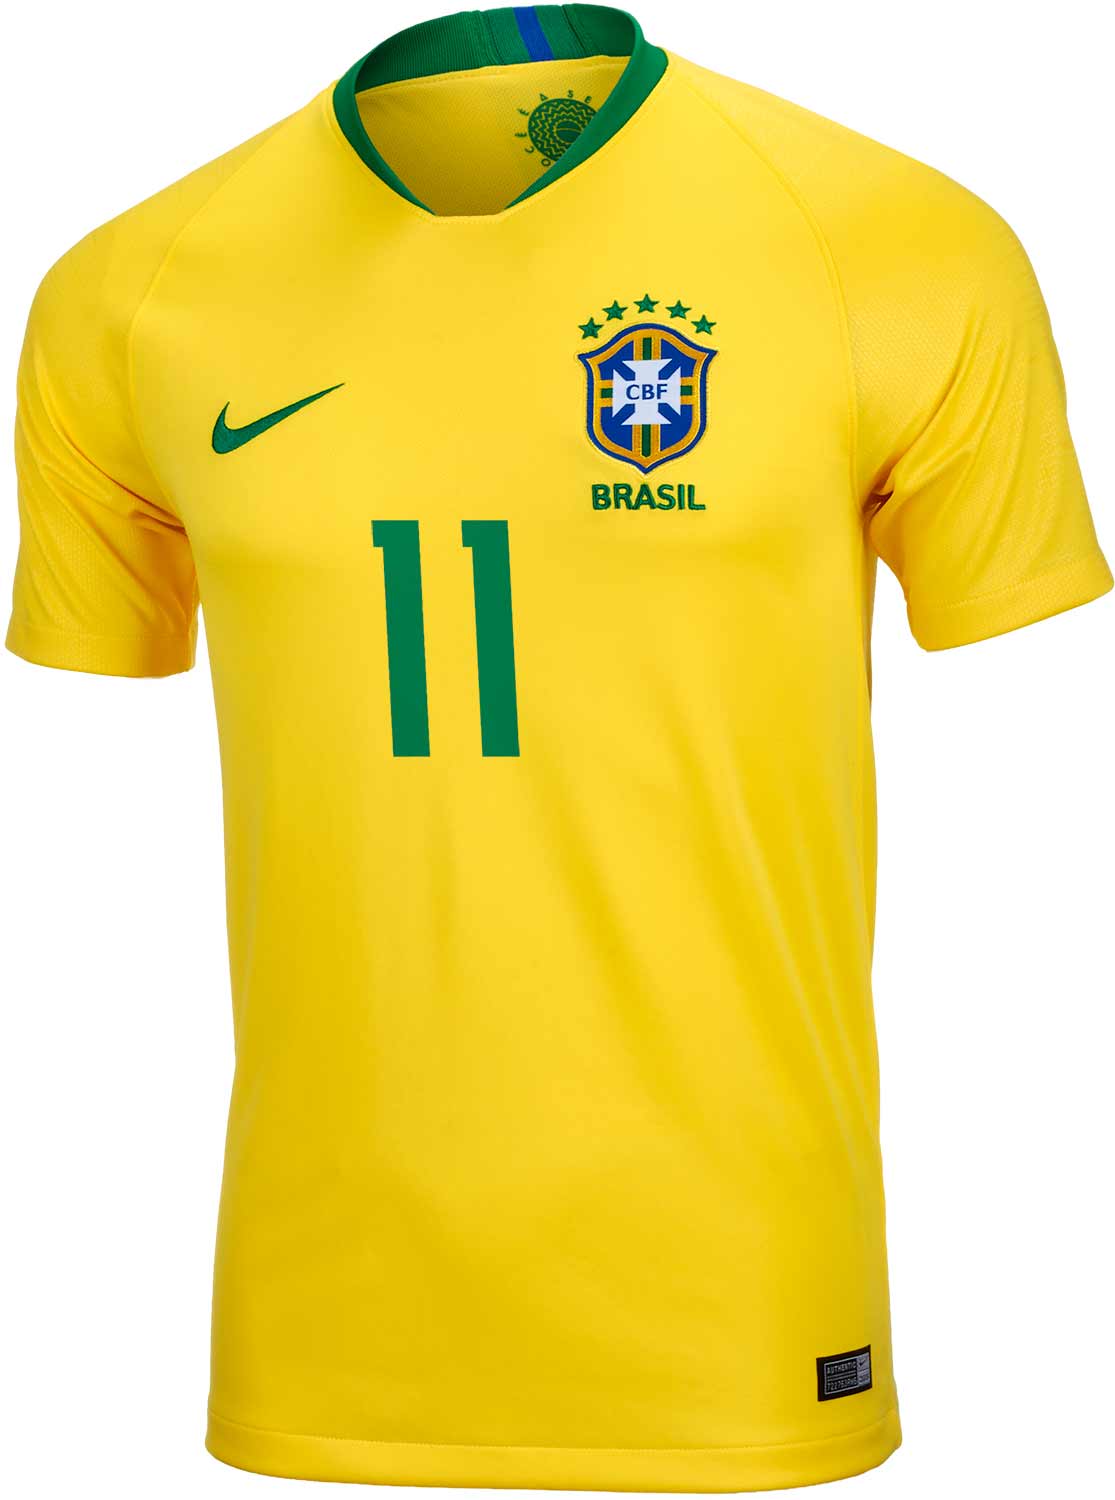 philippe coutinho brazil jersey